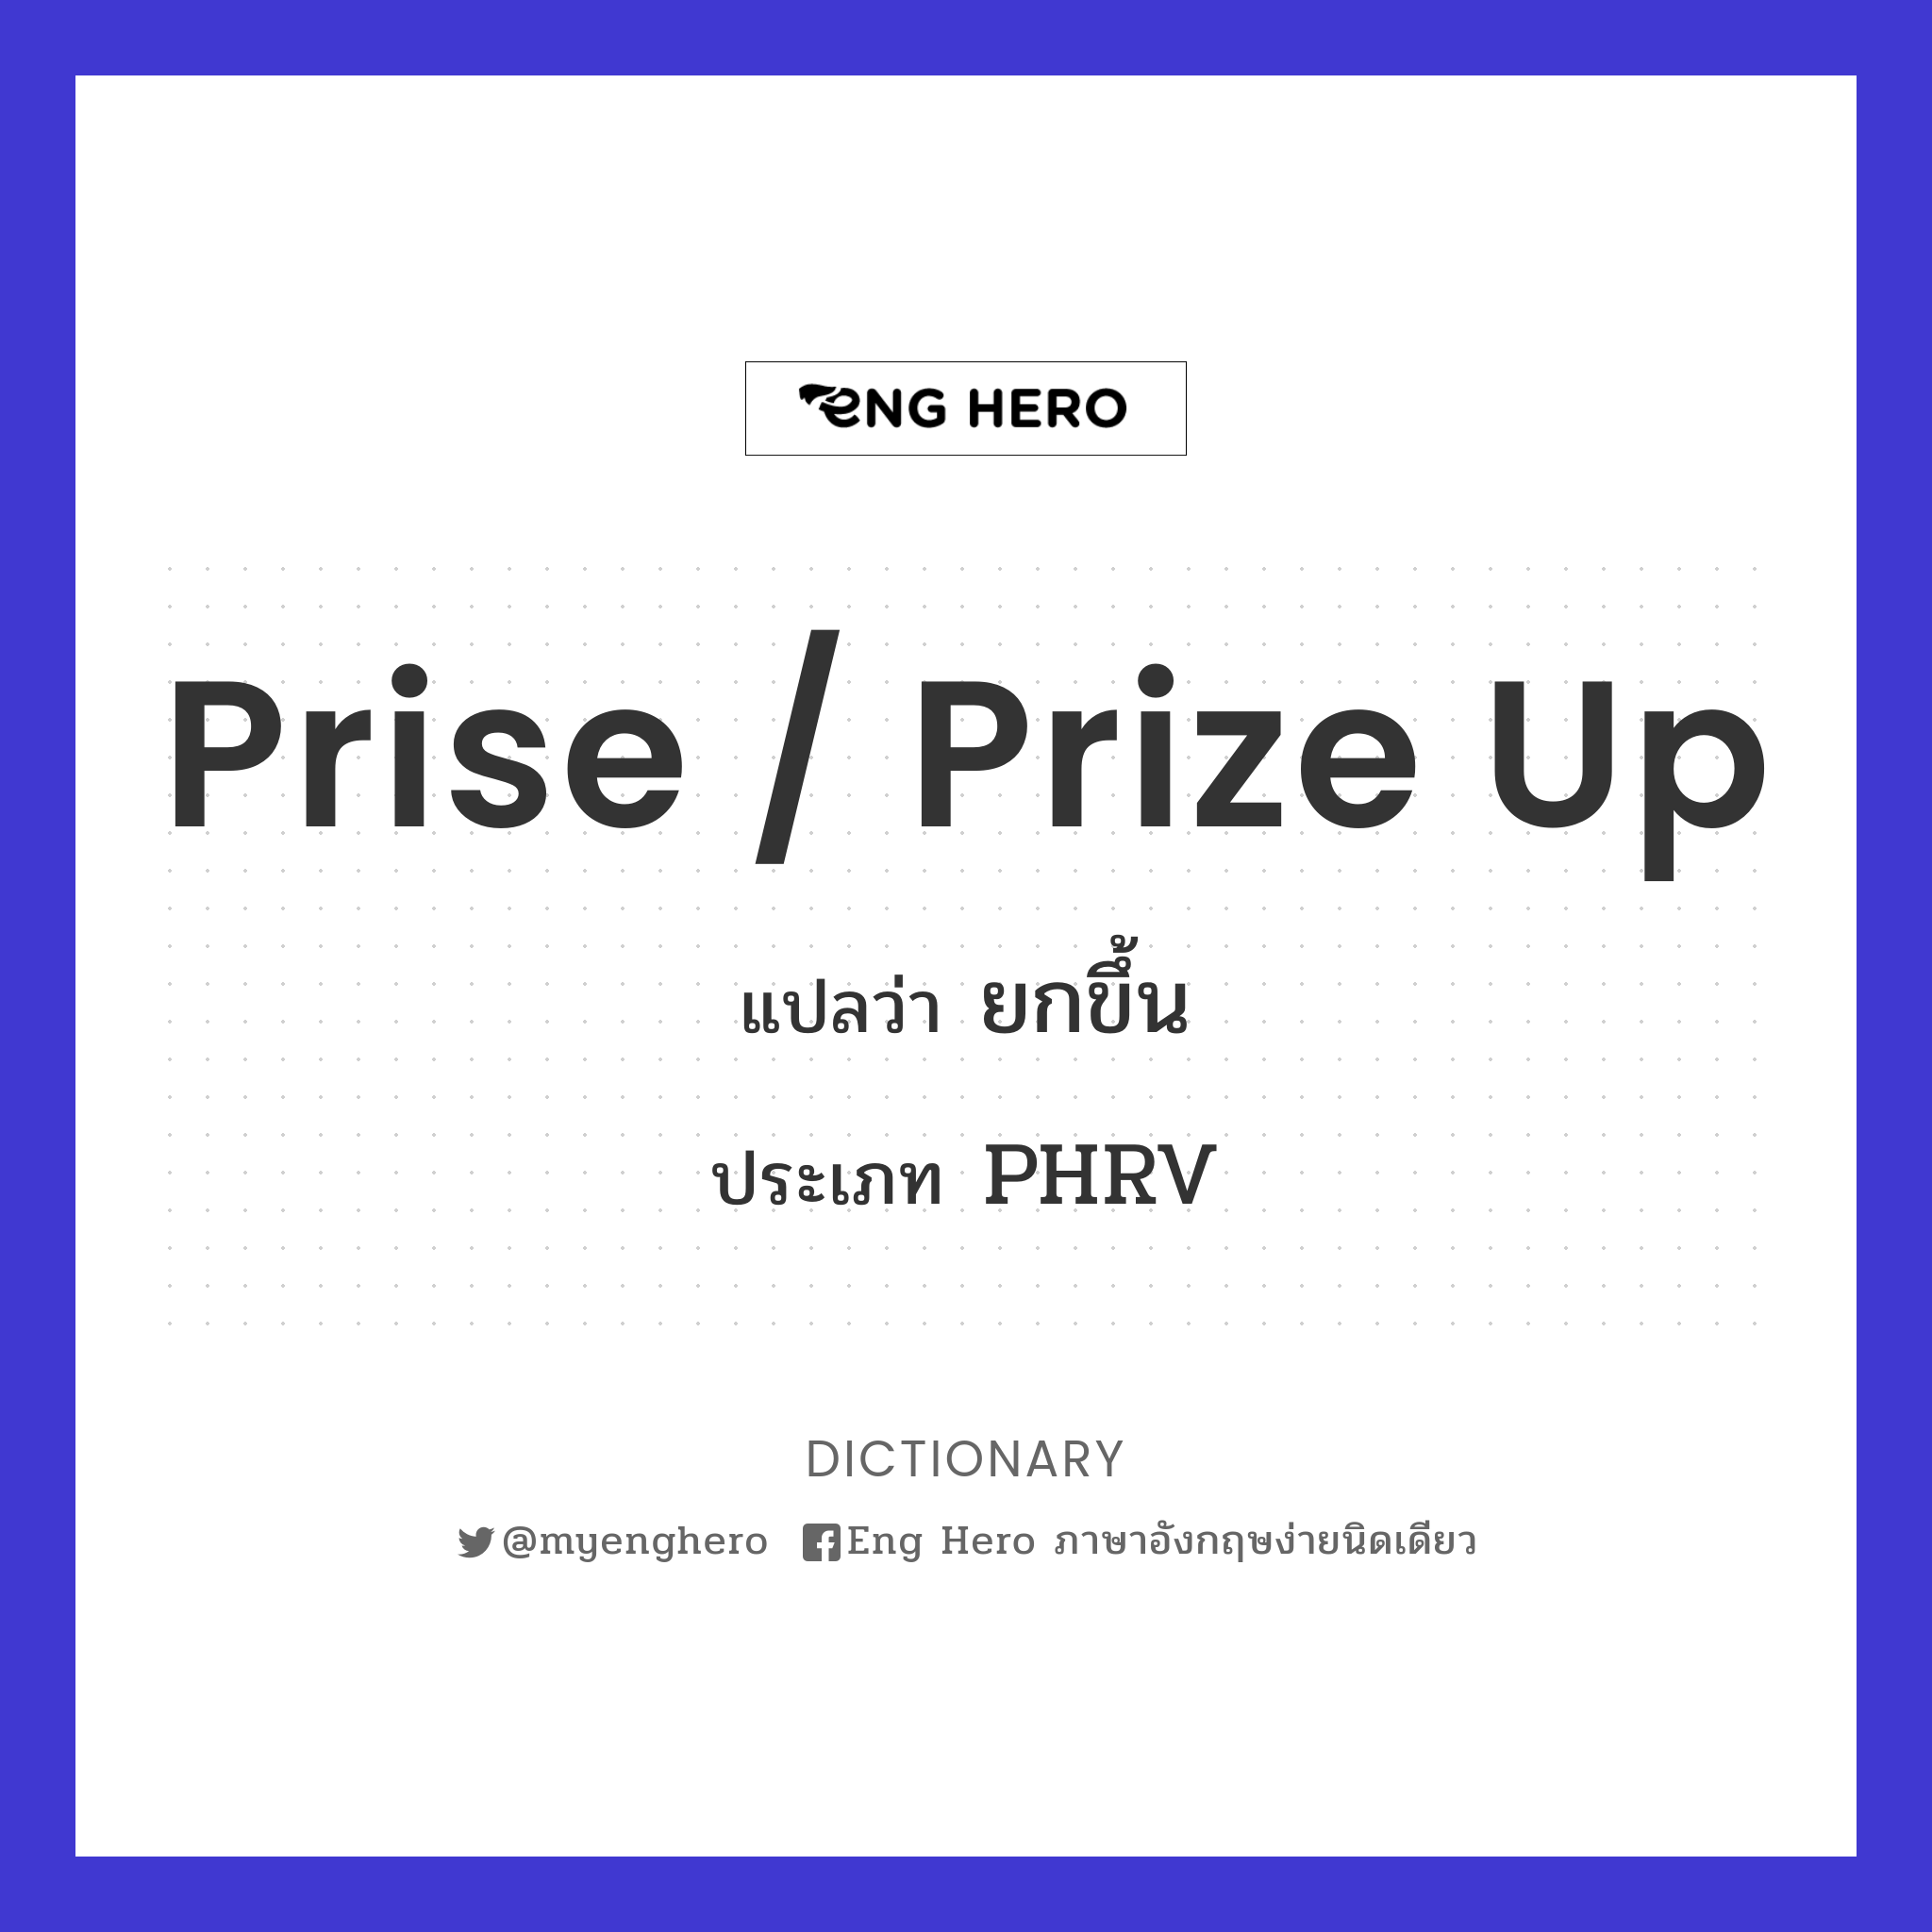 prise / prize up